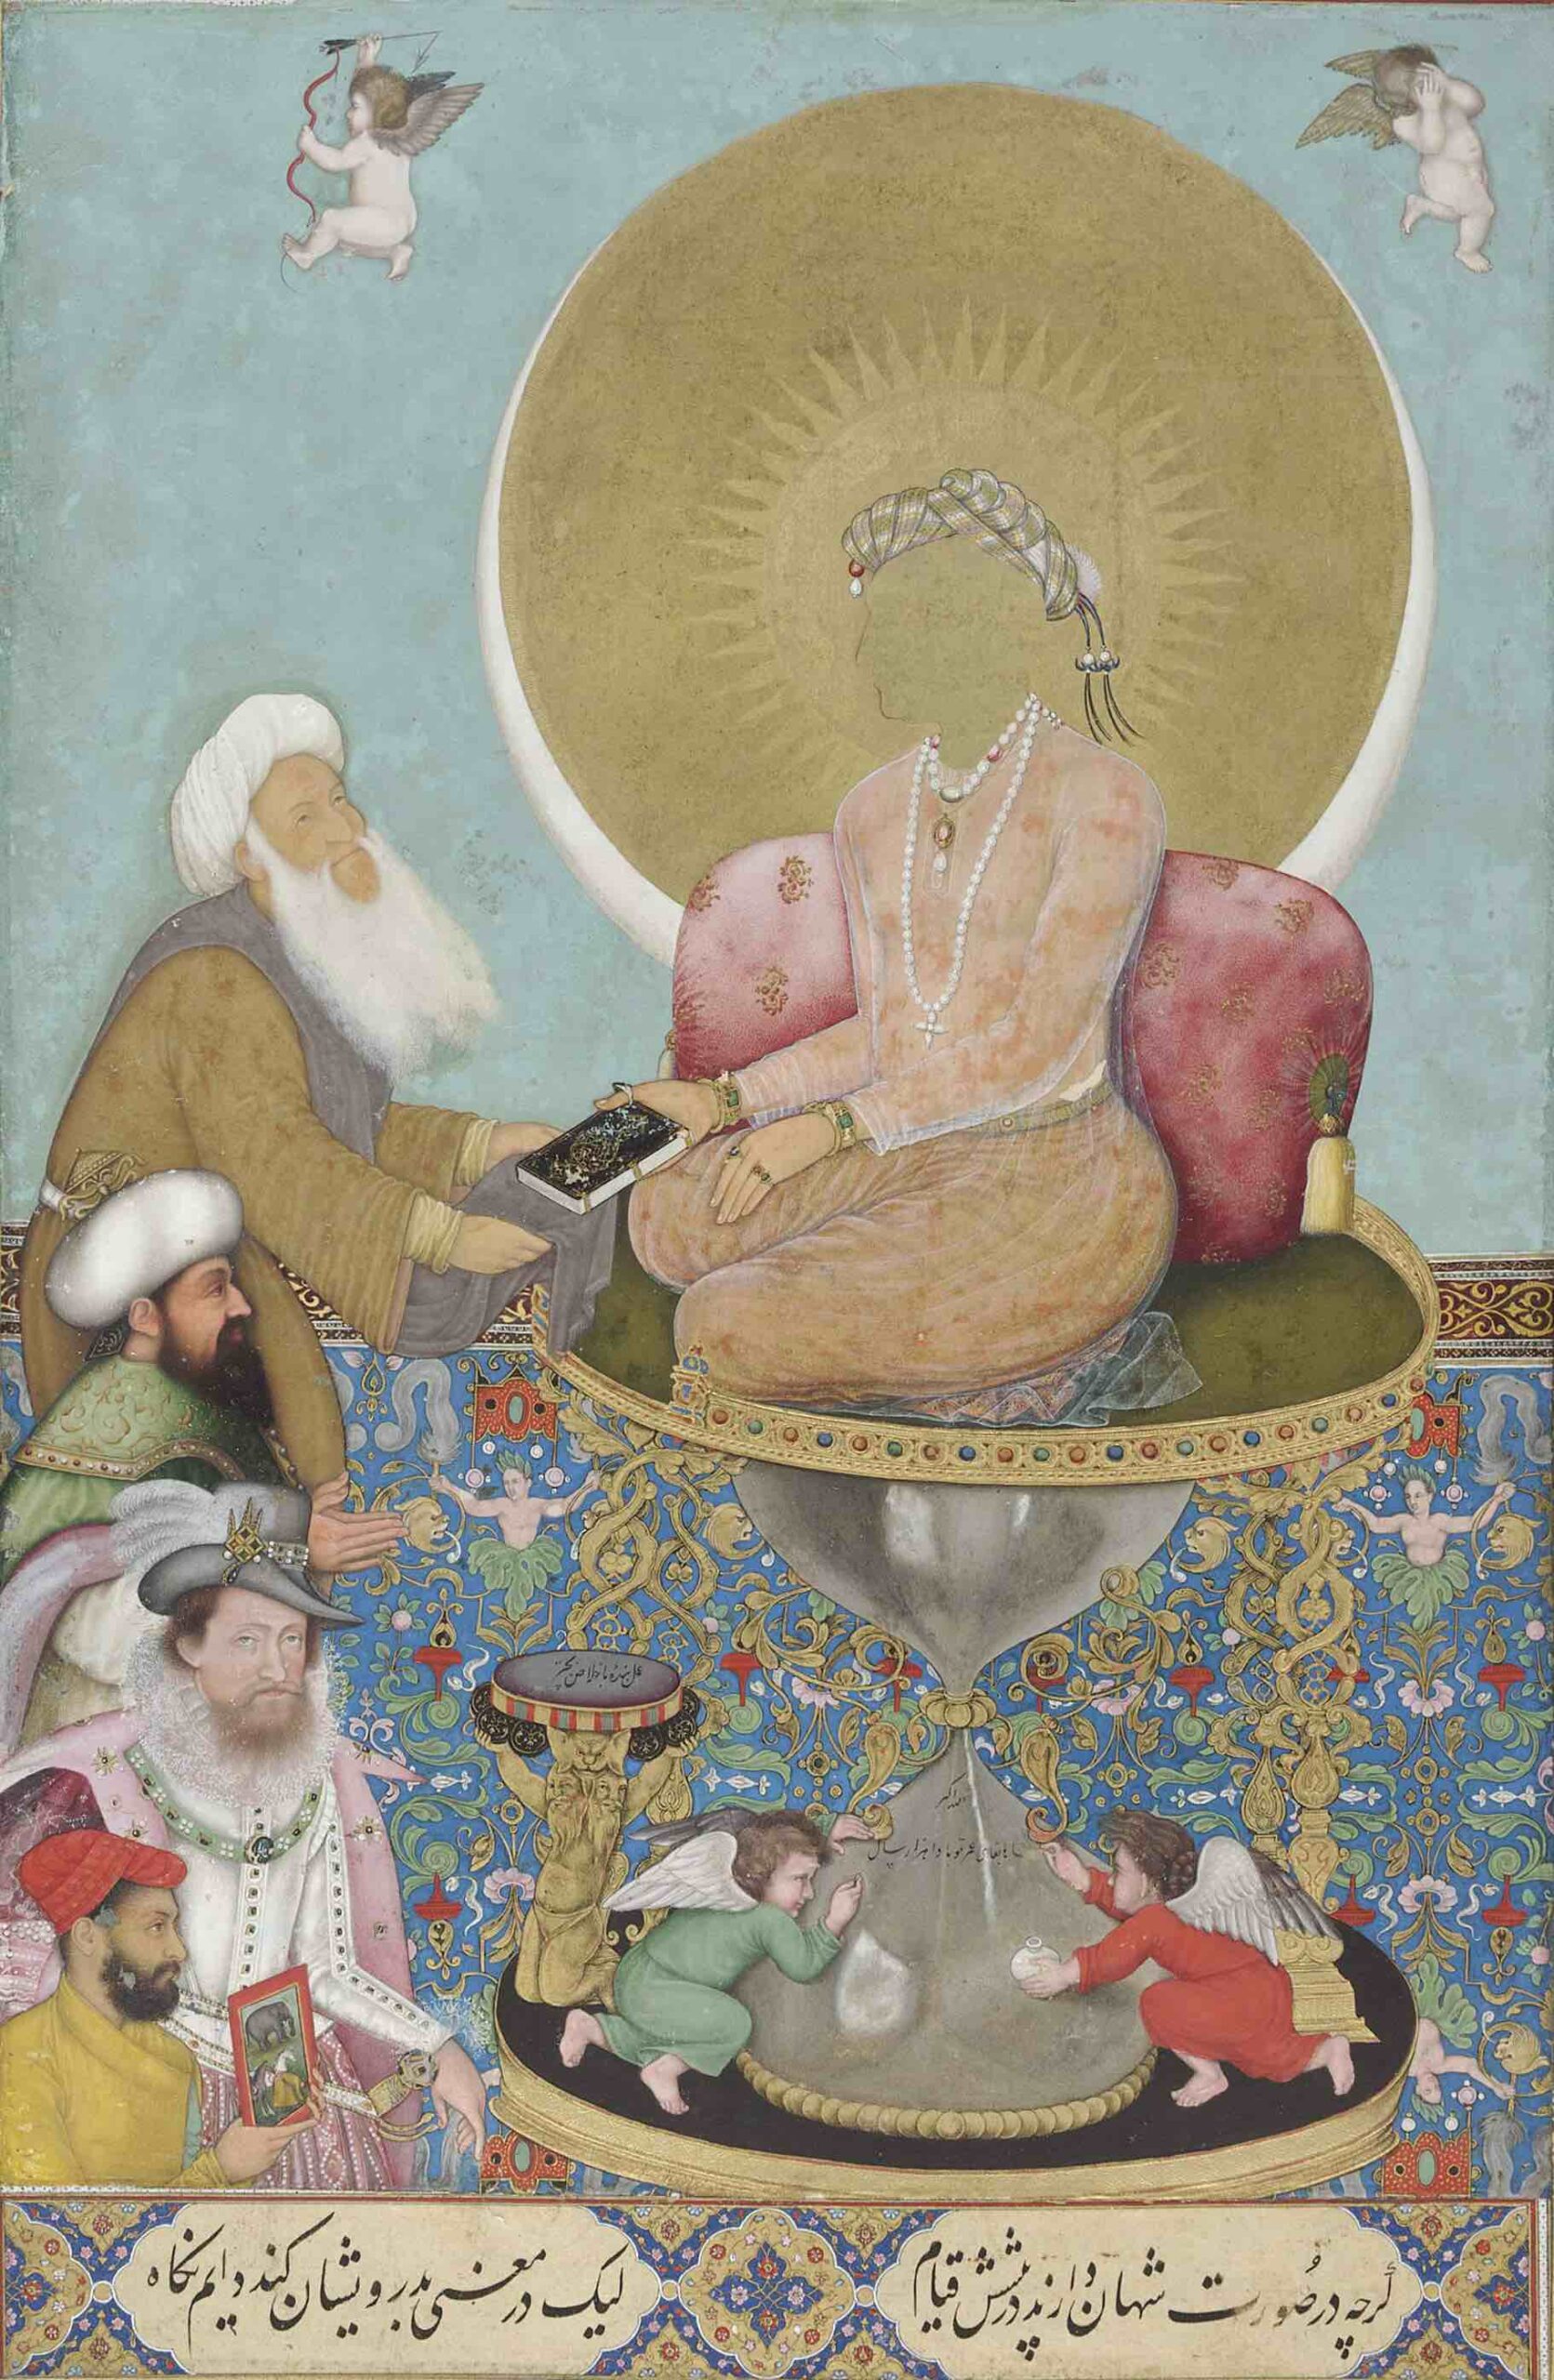 Islamique - Paintart